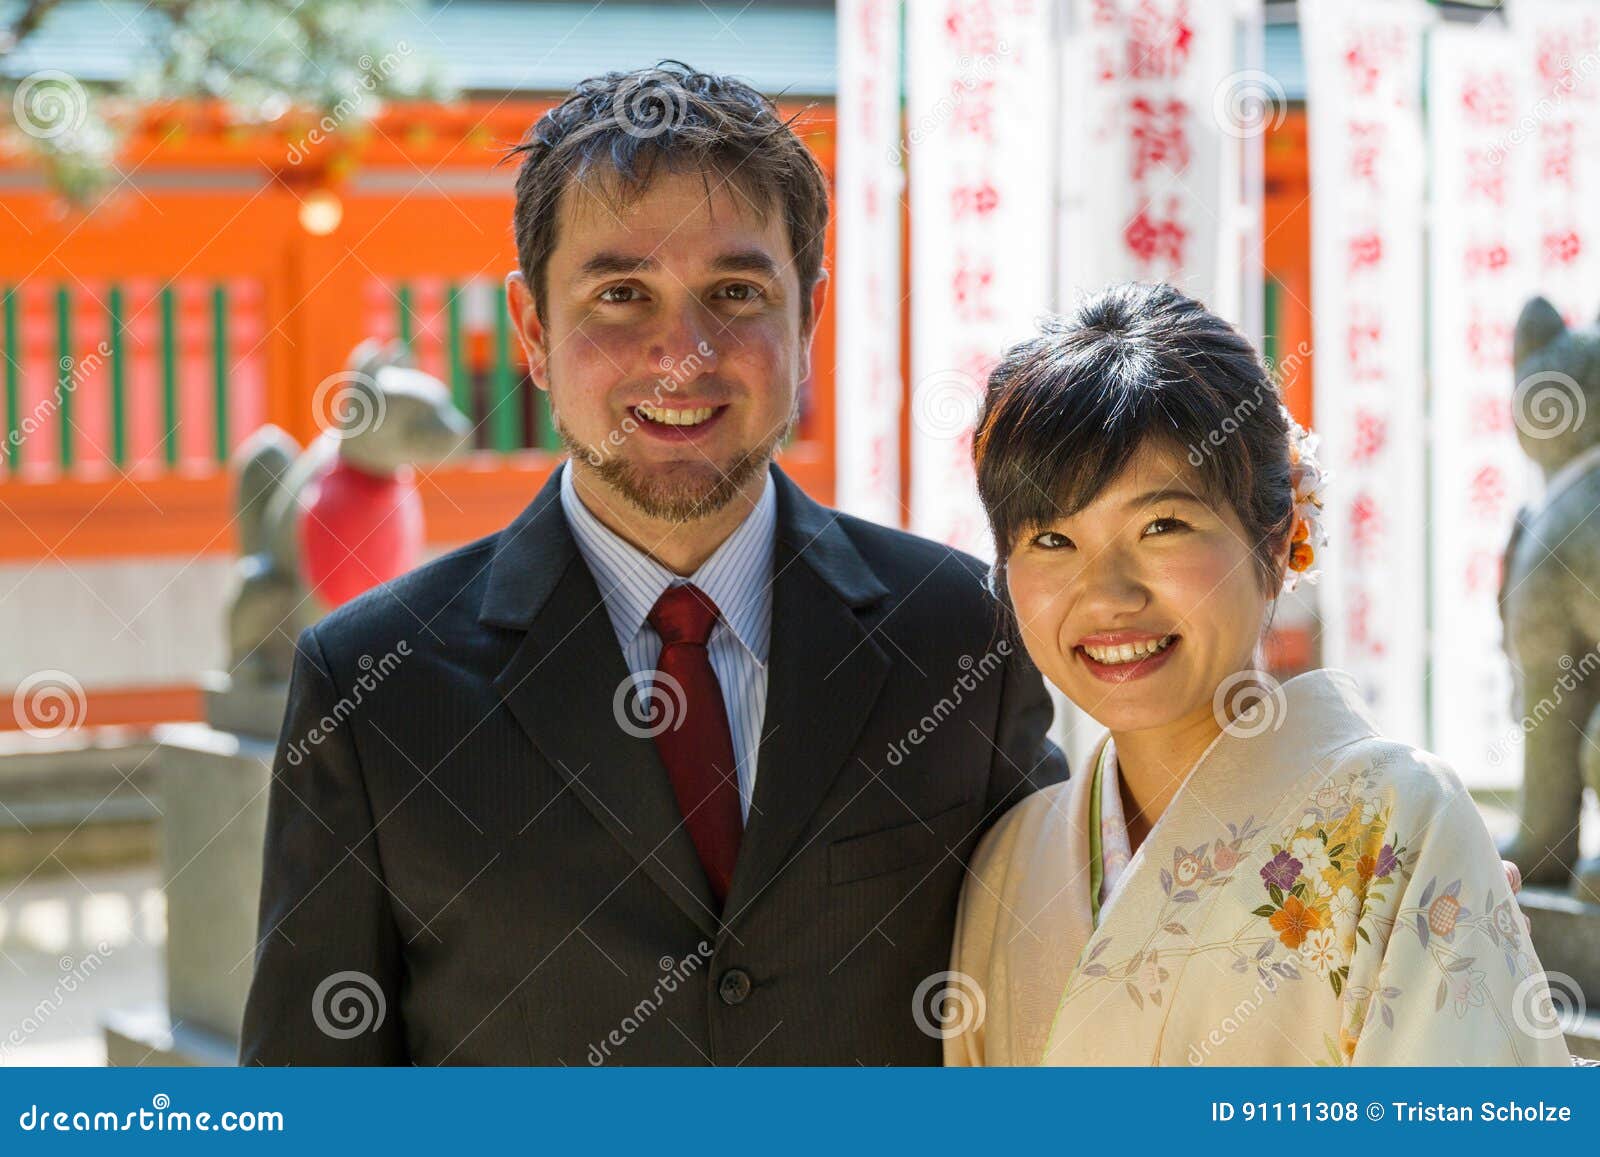 https://thumbs.dreamstime.com/z/international-couple-japanese-shrine-white-pose-suit-kimono-front-91111308.jpg